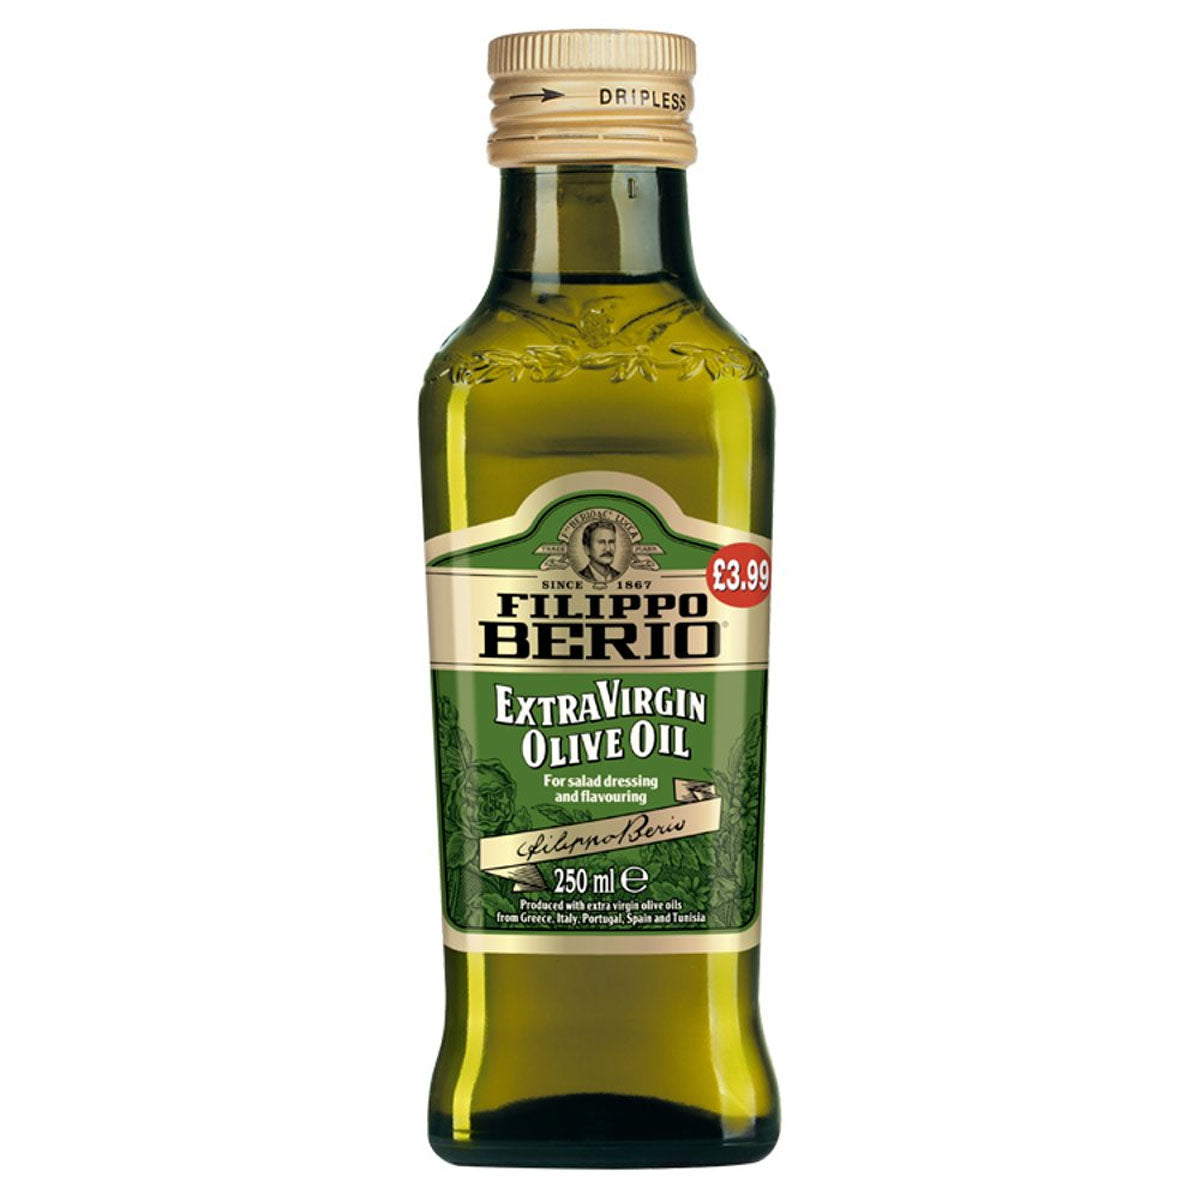 Filippo Berio - Extra Virgin Olive Oil - 250ml - Continental Food Store